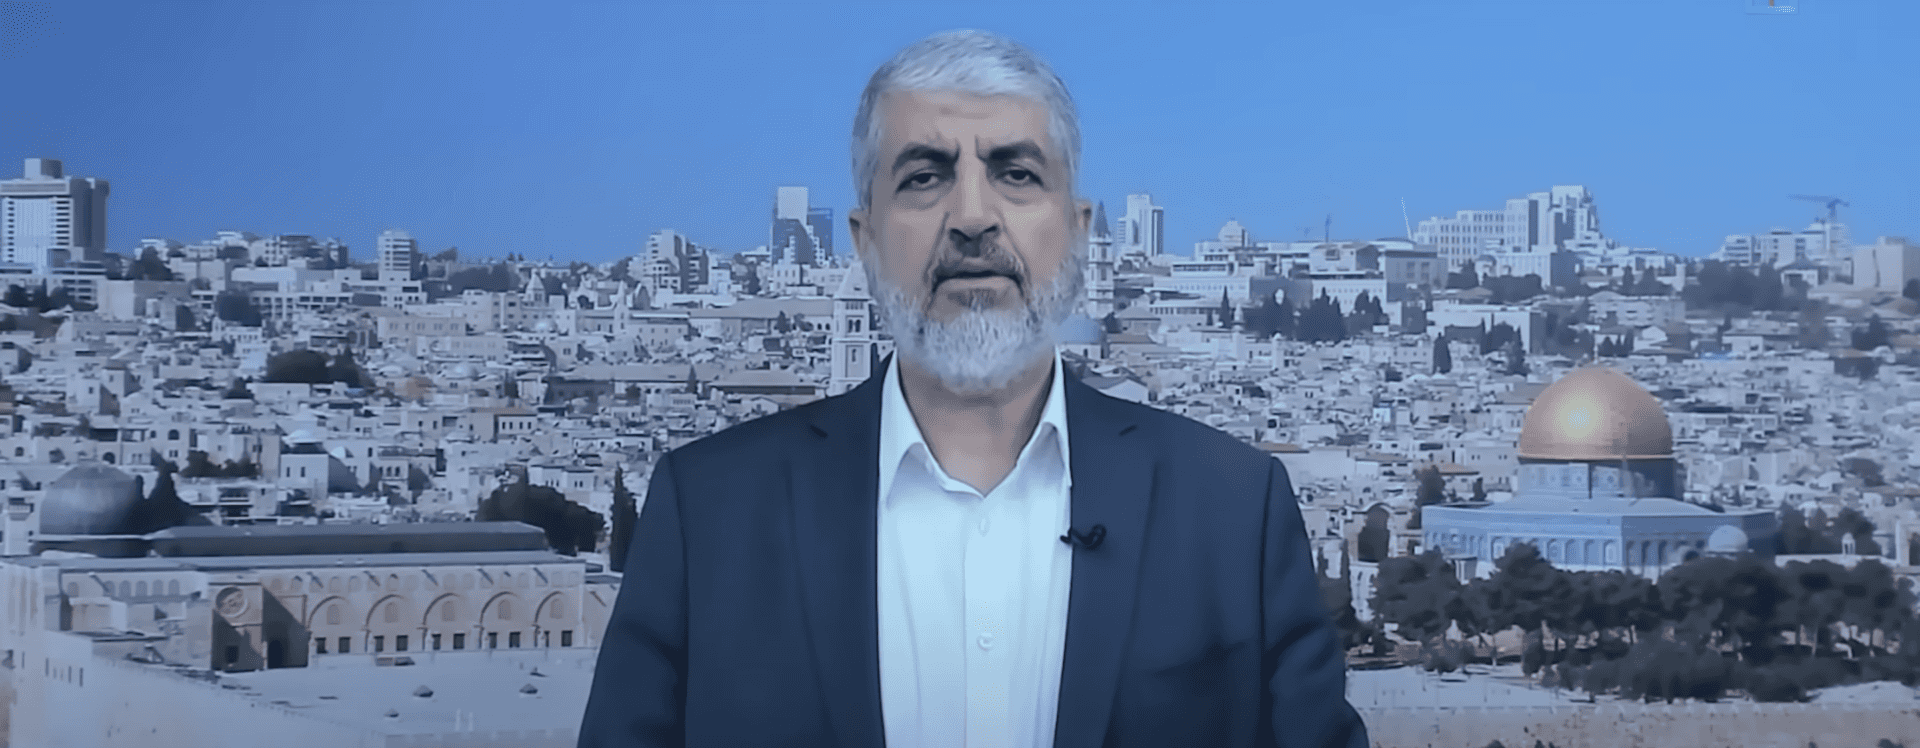 Hamas calls for global Jihad, attack Jews worldwide Friday